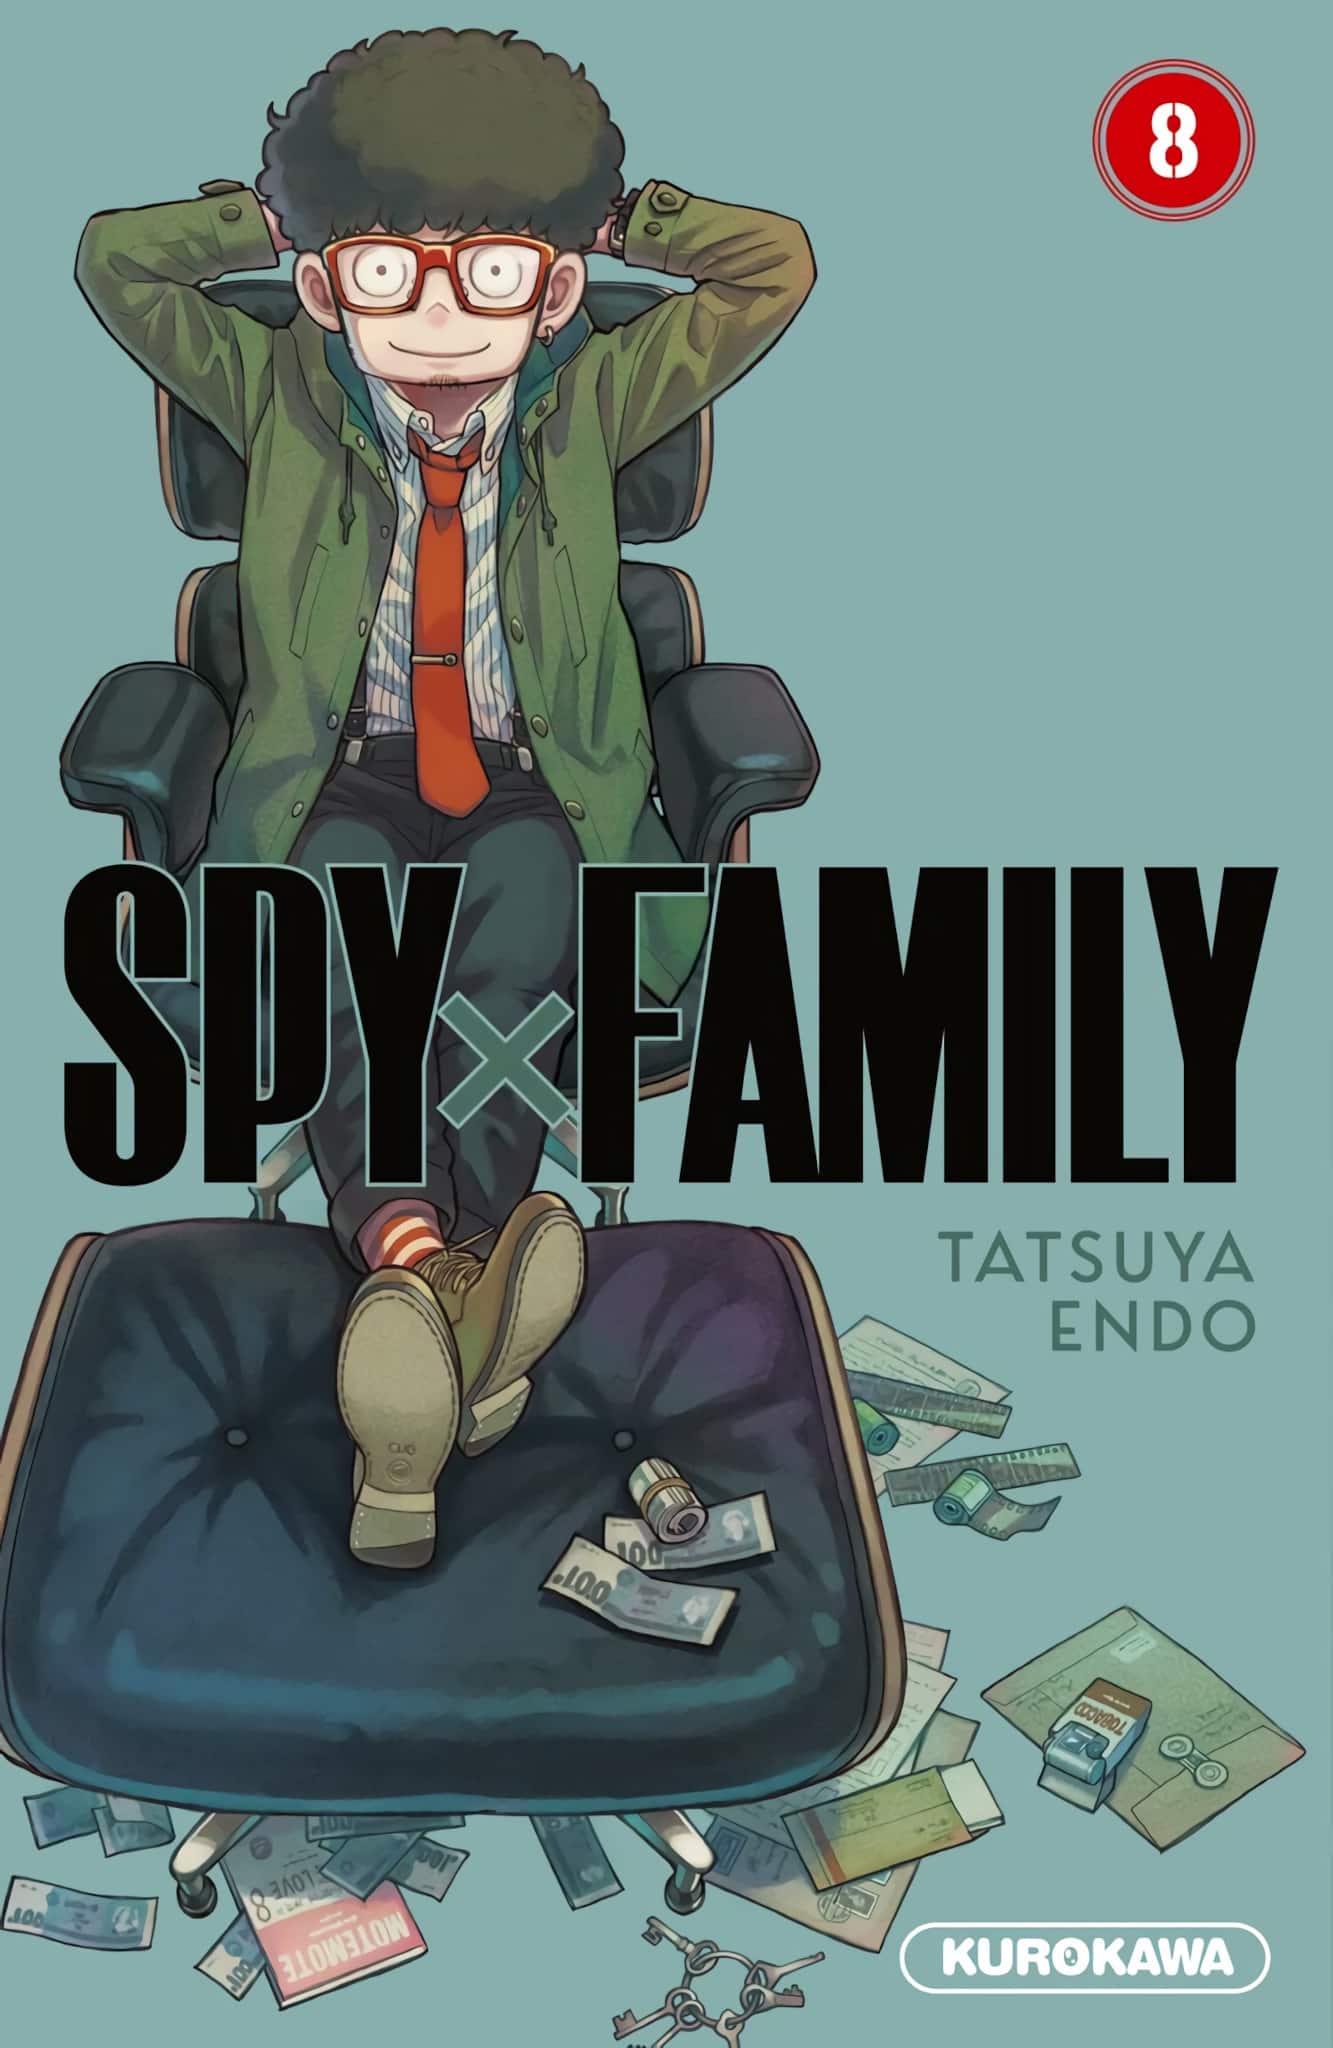 Tome 8 du manga Spy x Family